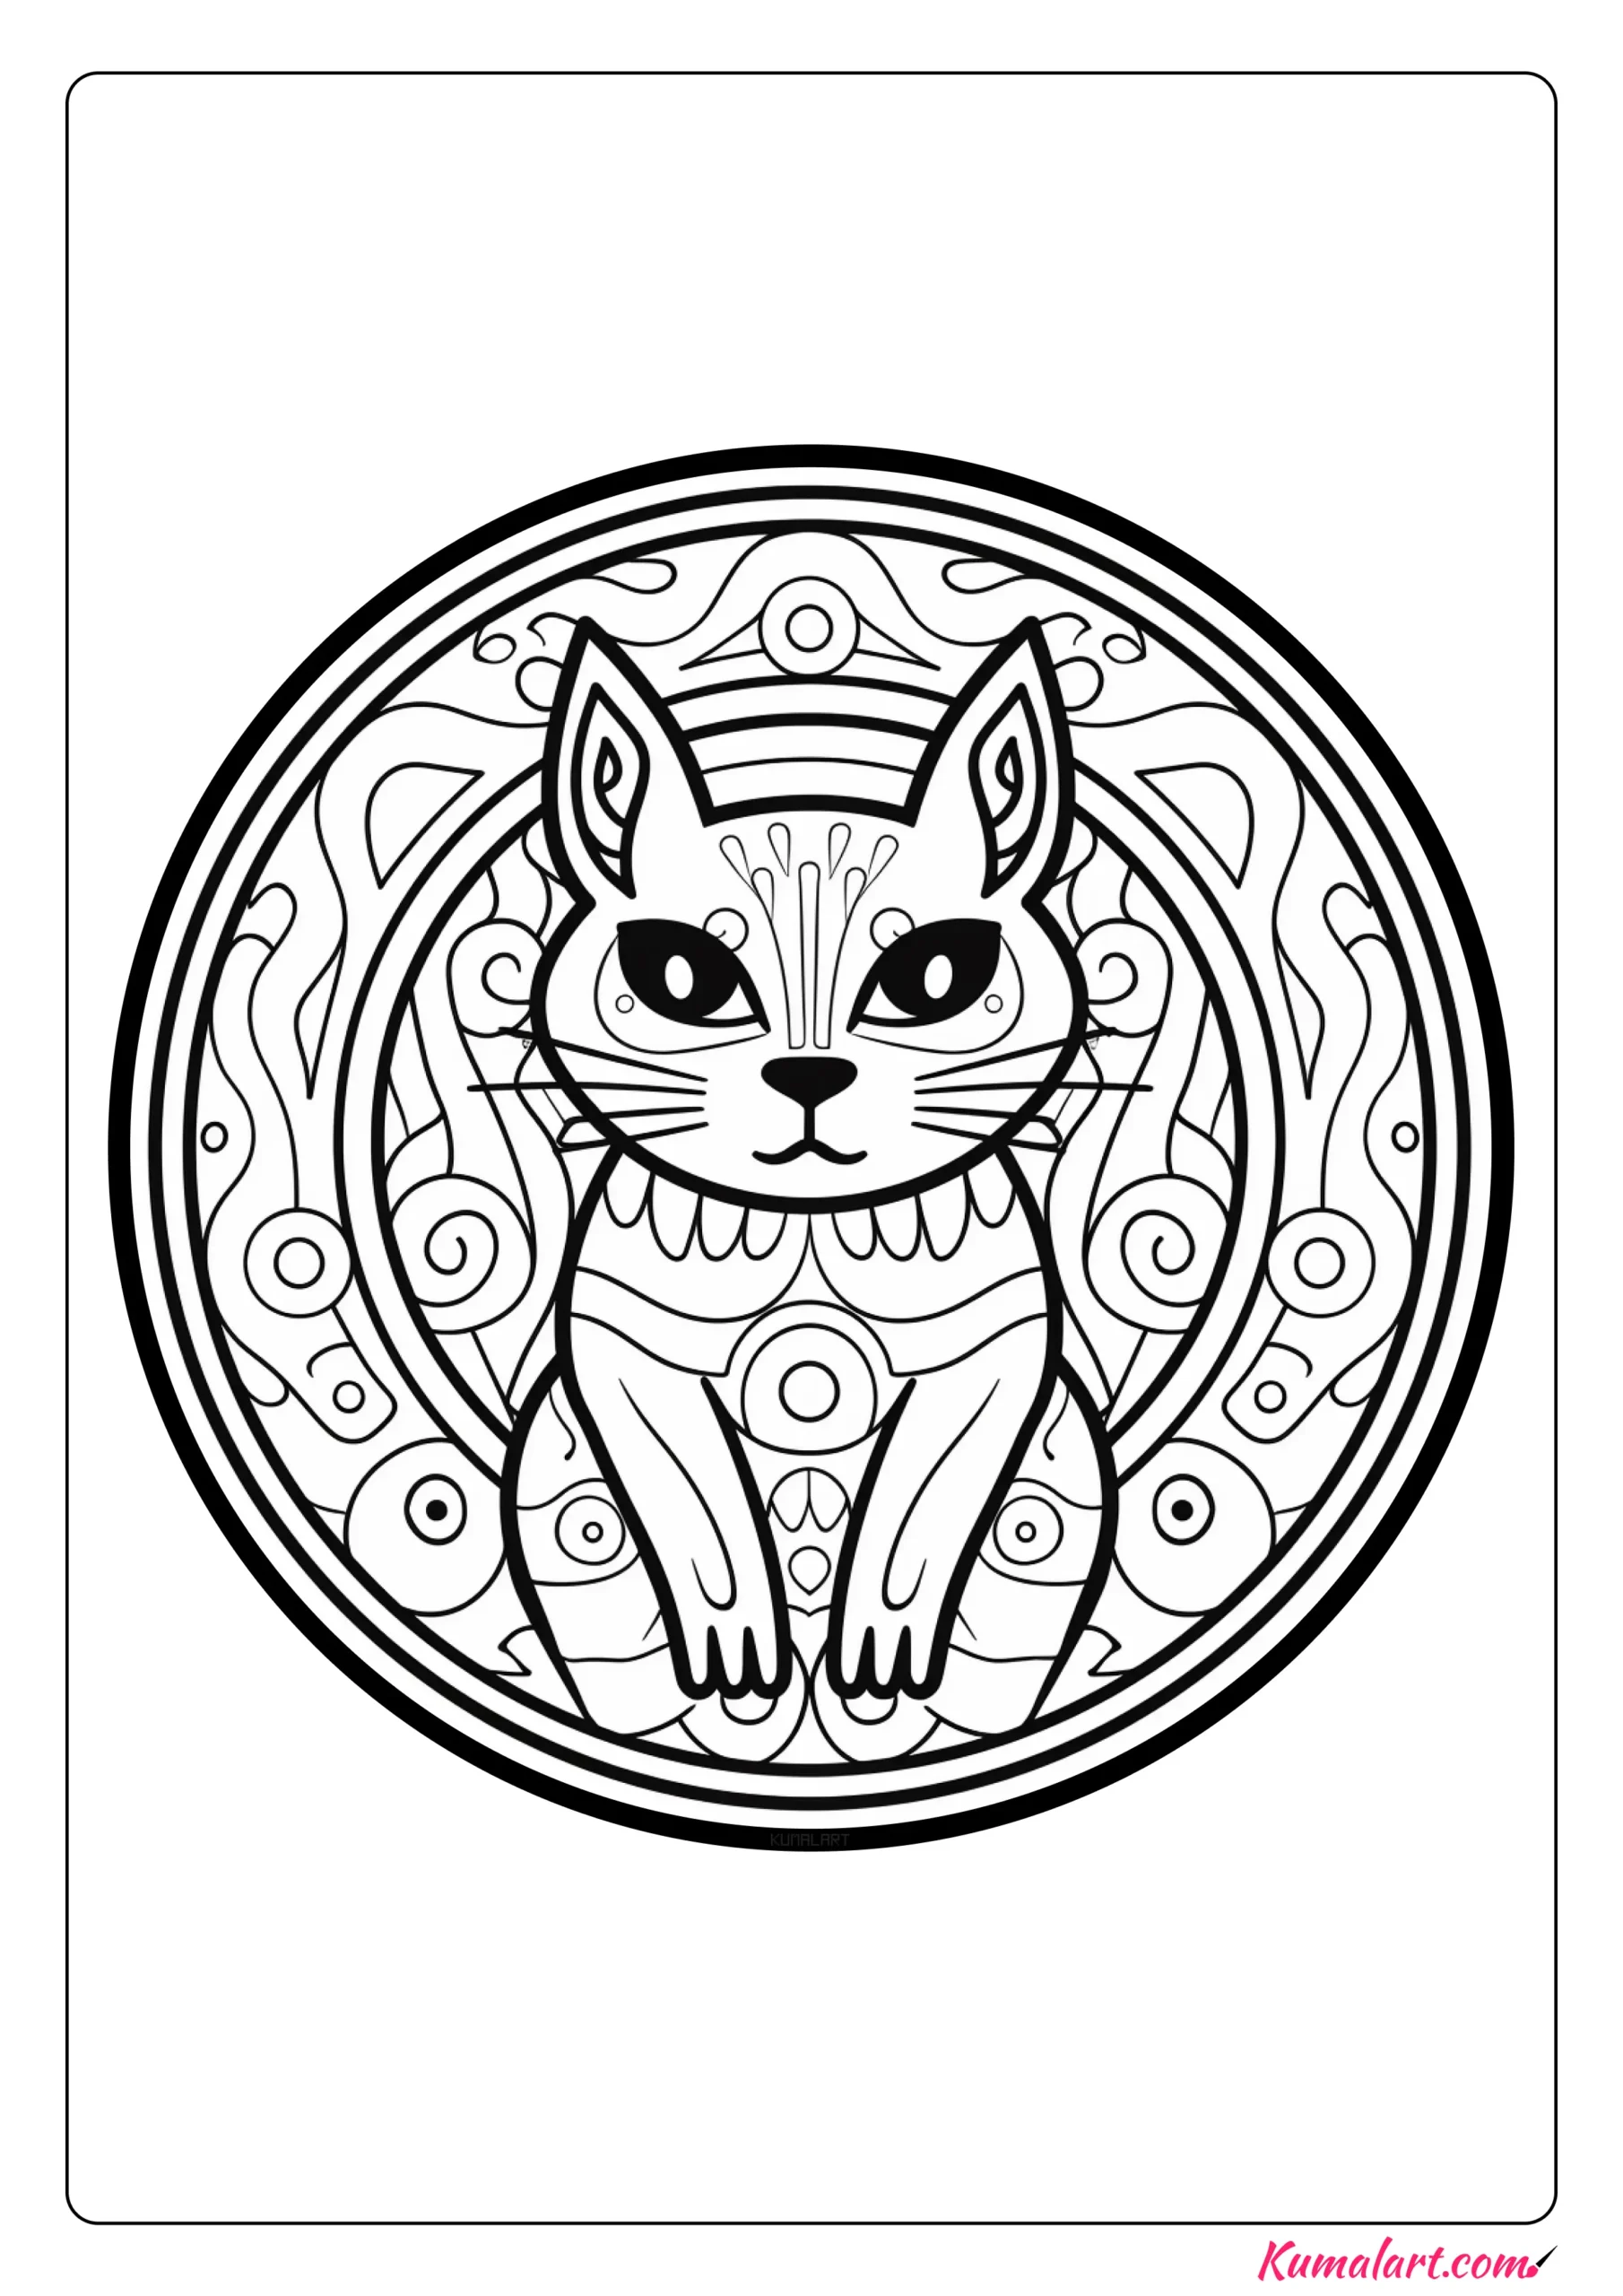 Alan the Cat Mandala Coloring Page